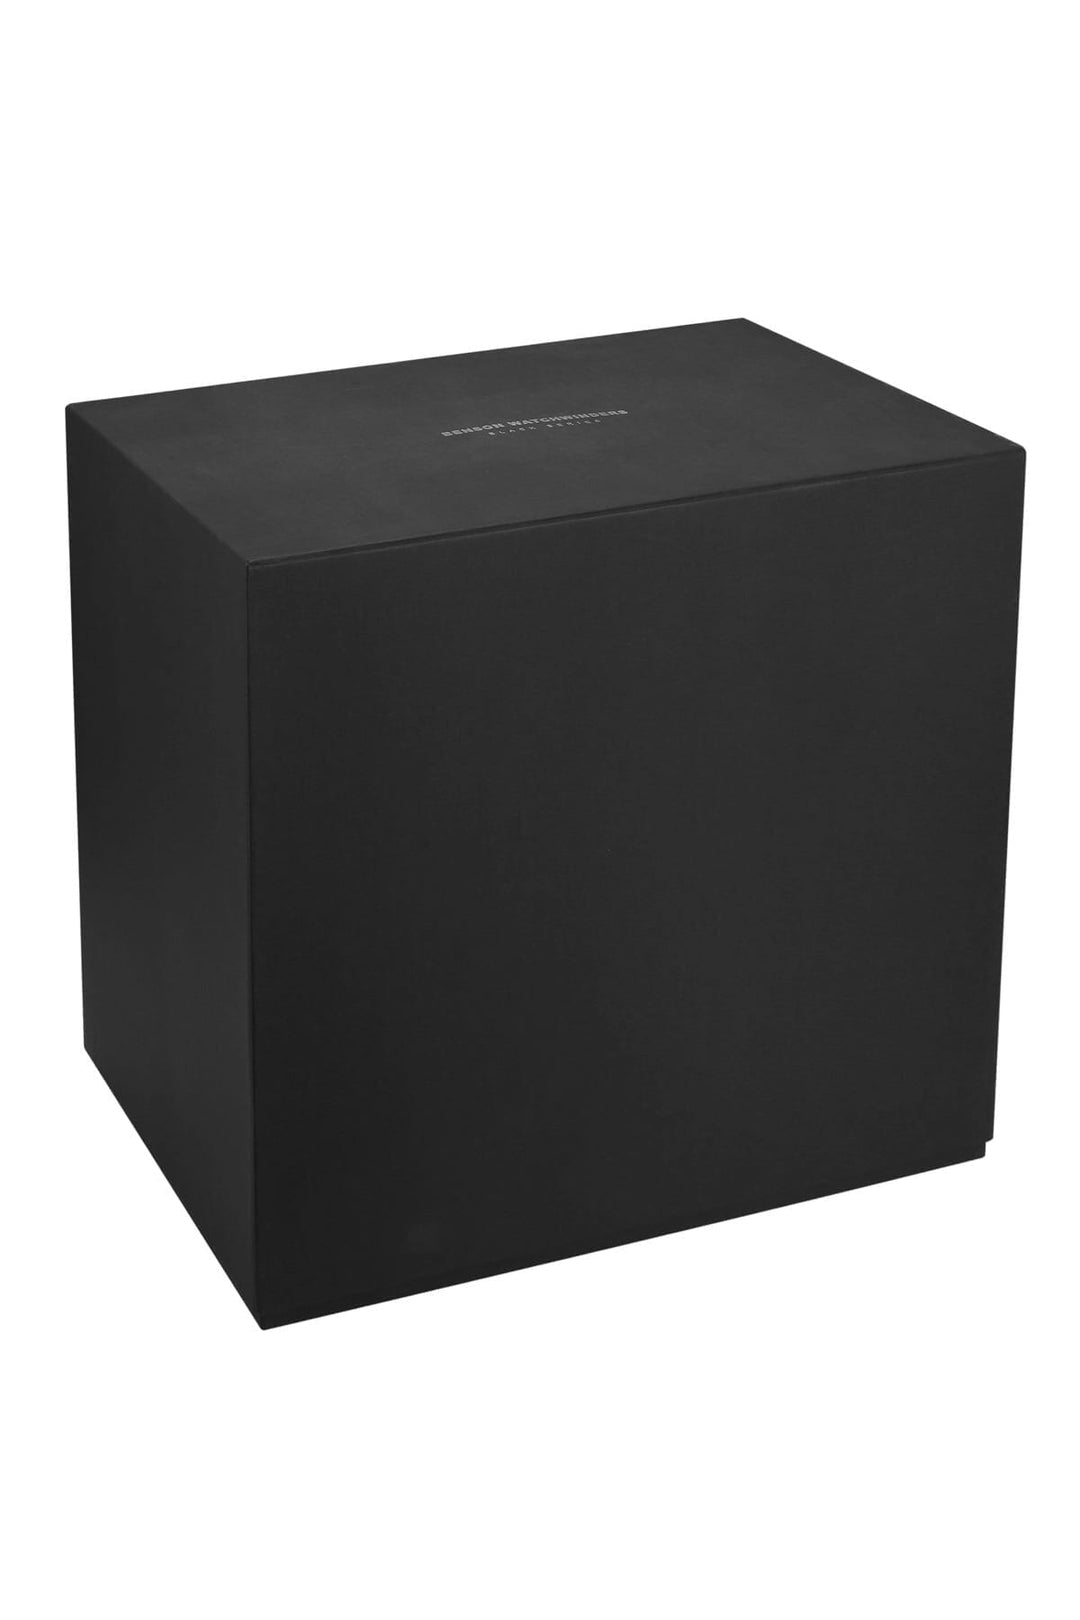 Remontoir Limited Edition Black Series 4.16.WL Benson